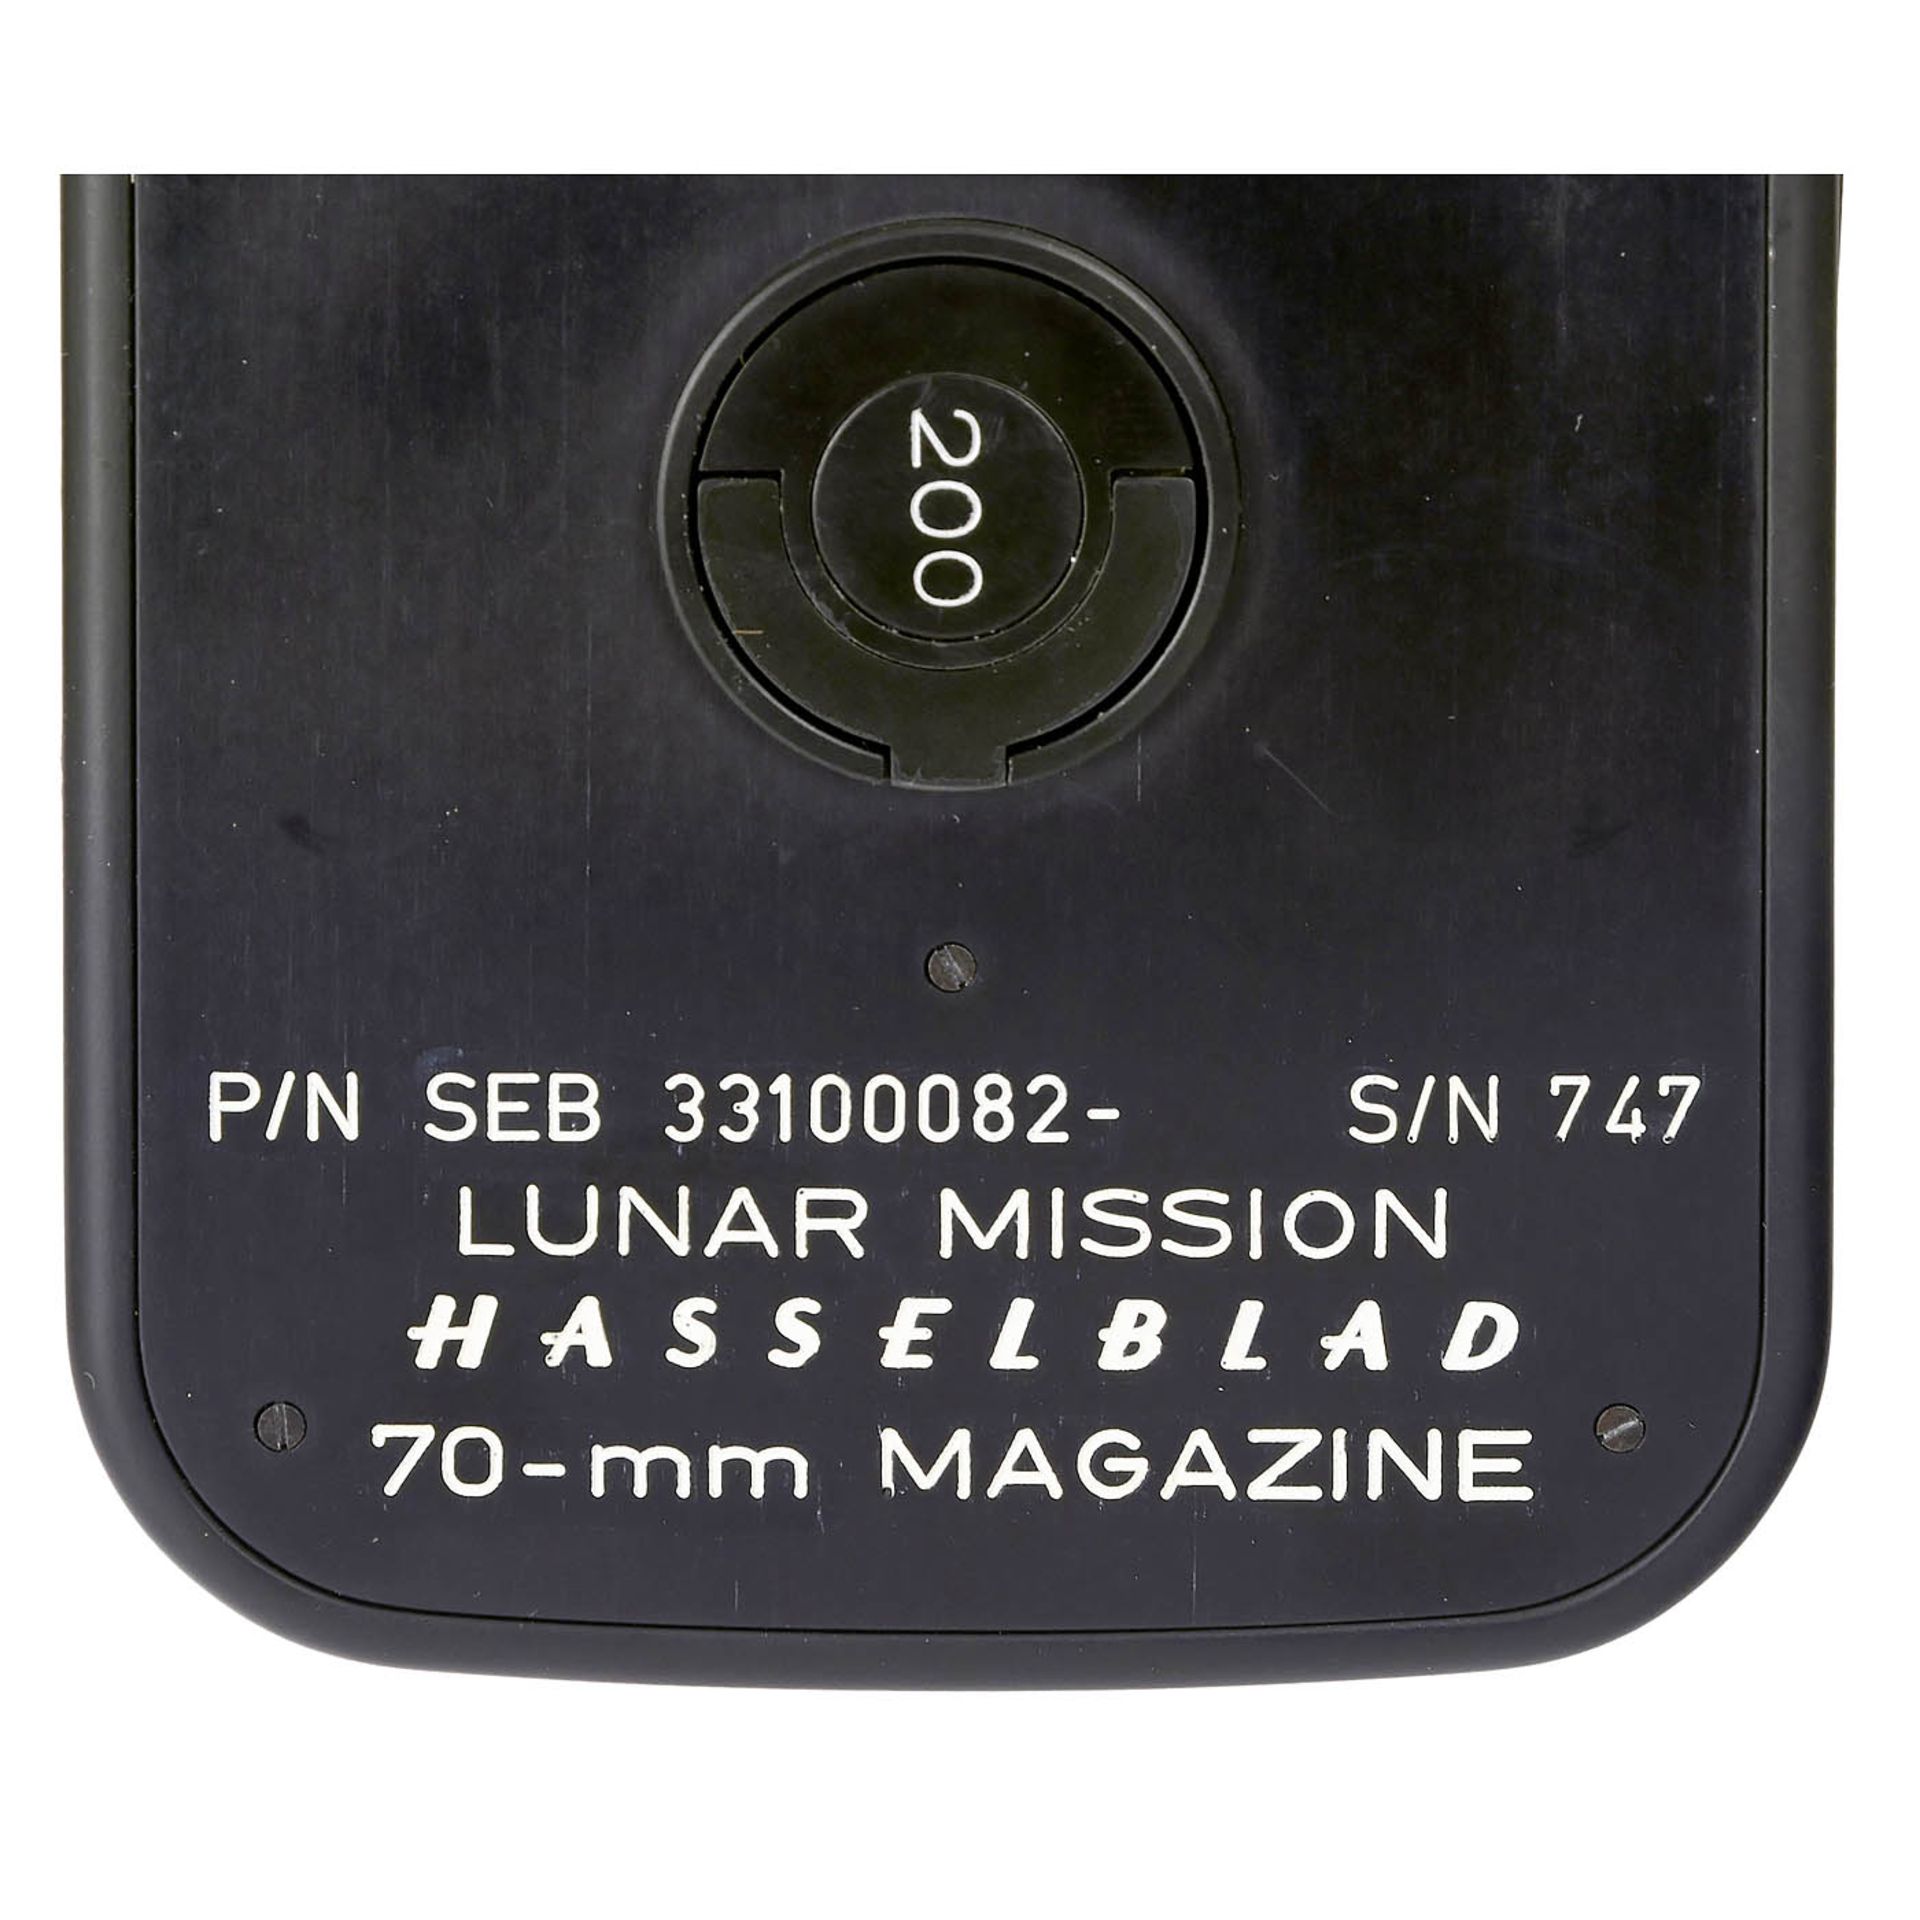 Hasselblad SWC Replica with "Lunar Mission Hasselblad 70-mm Magazine" - Bild 3 aus 6